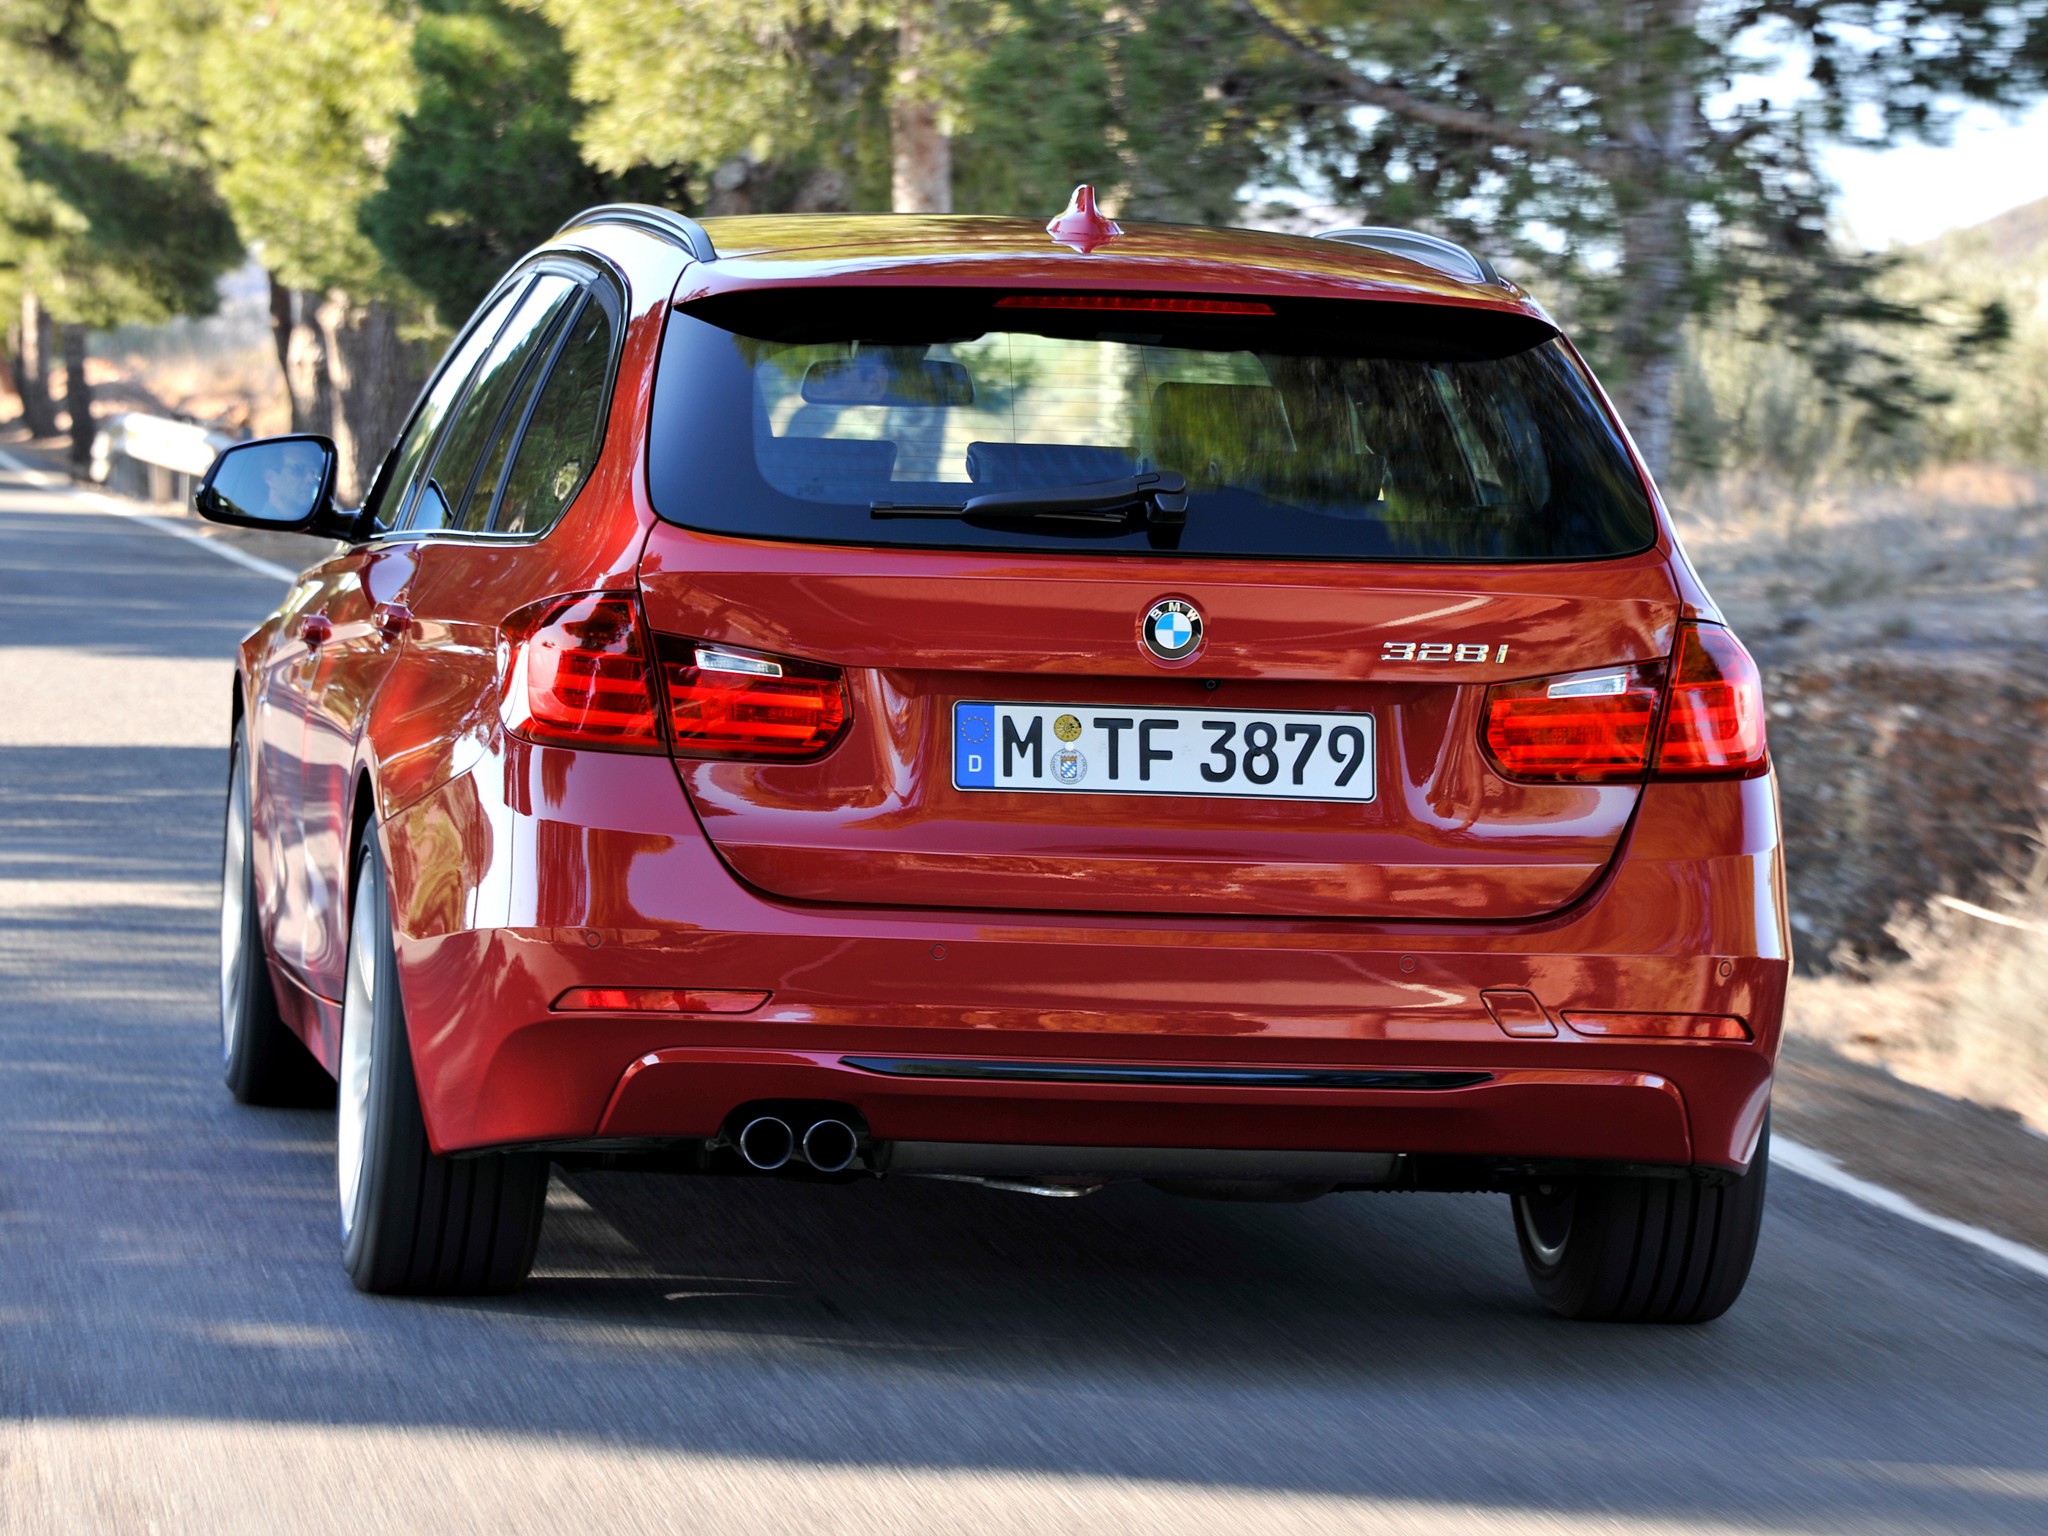 BMW 3er Touring 2012 (F31): Die neue Kombi-Generation im Detail